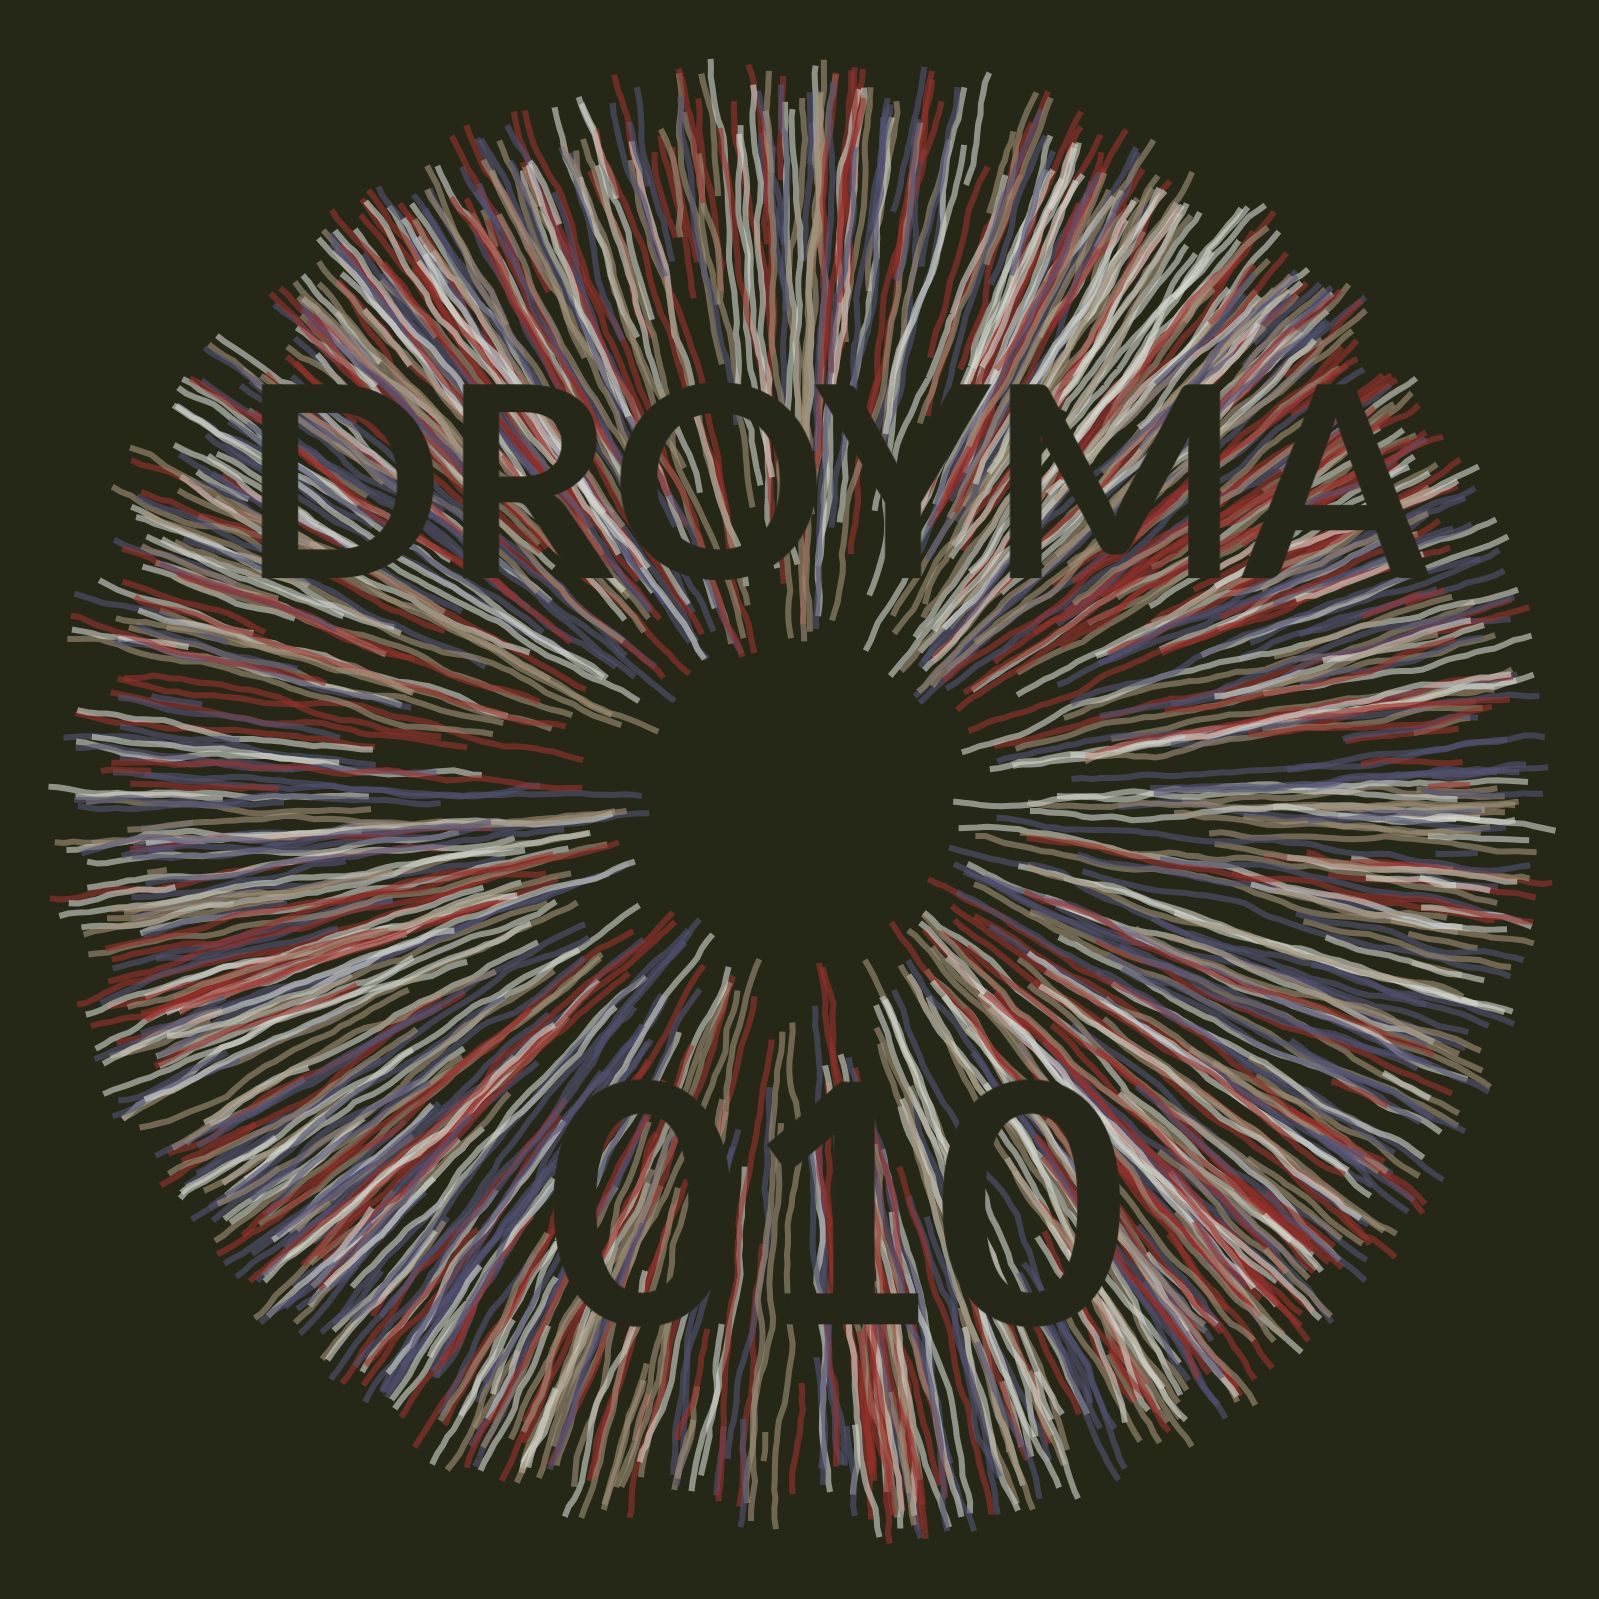 Dhawunirodha Droyma Mix 010 - April 2019